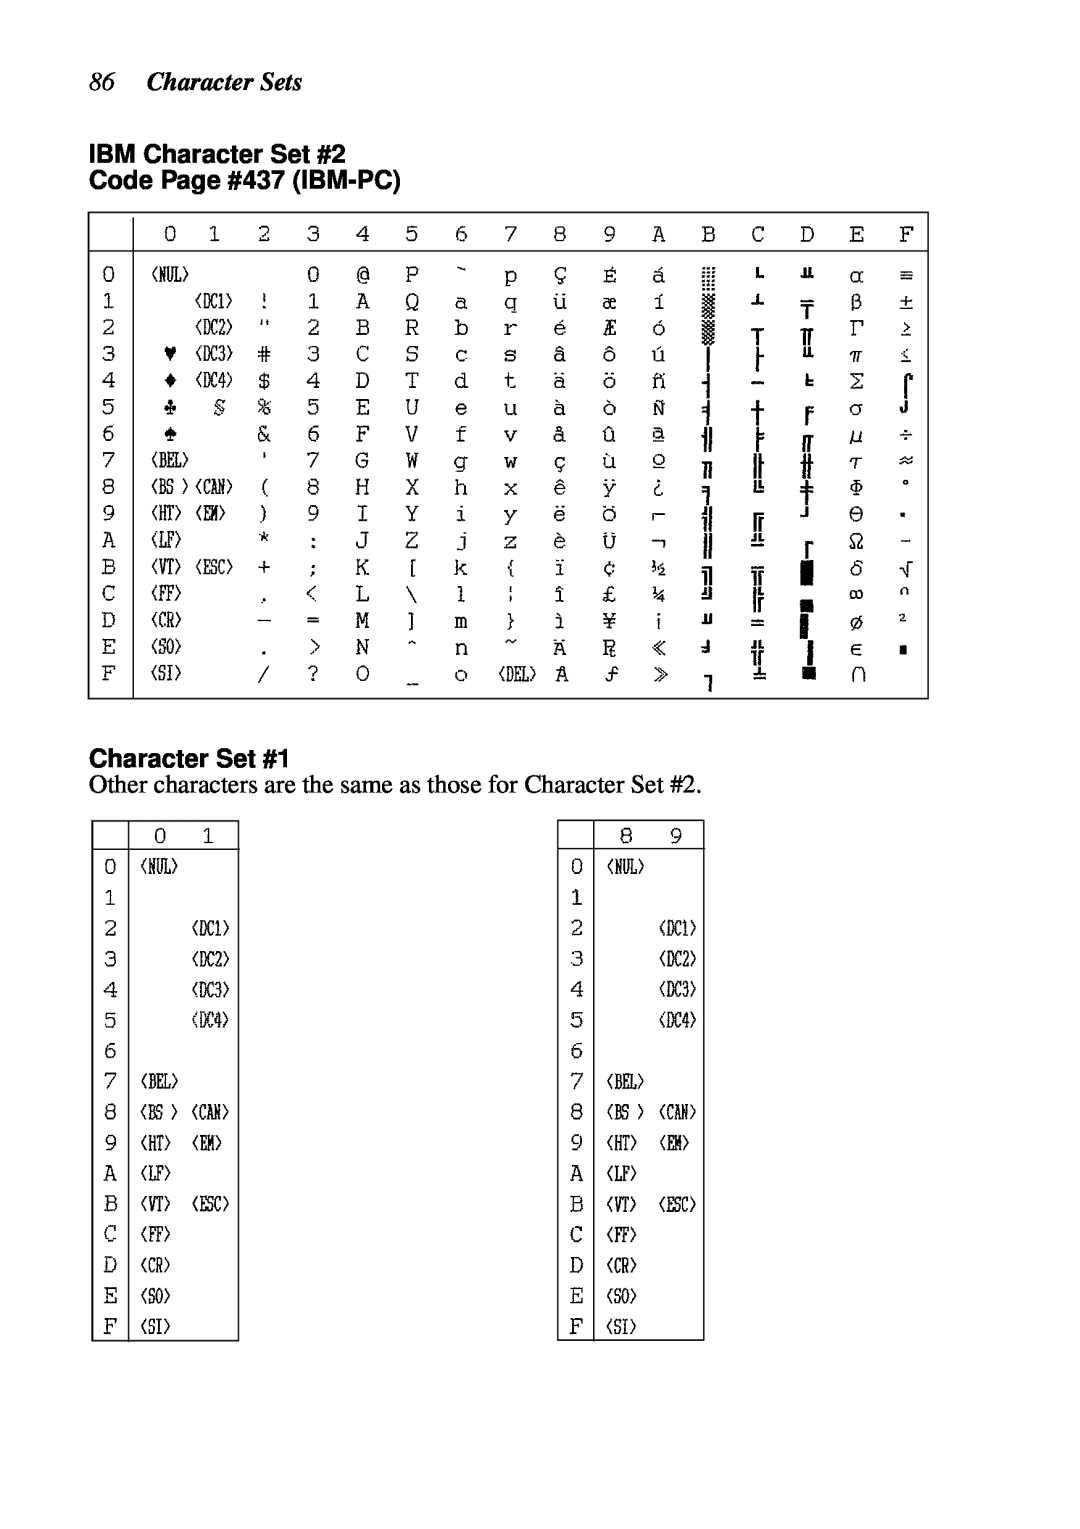 Star Micronics DOT MATRIX PRINTERS, LC-1521 Character Sets, IBM Character Set #2 Code Page #437 IBM-PC Character Set #1 